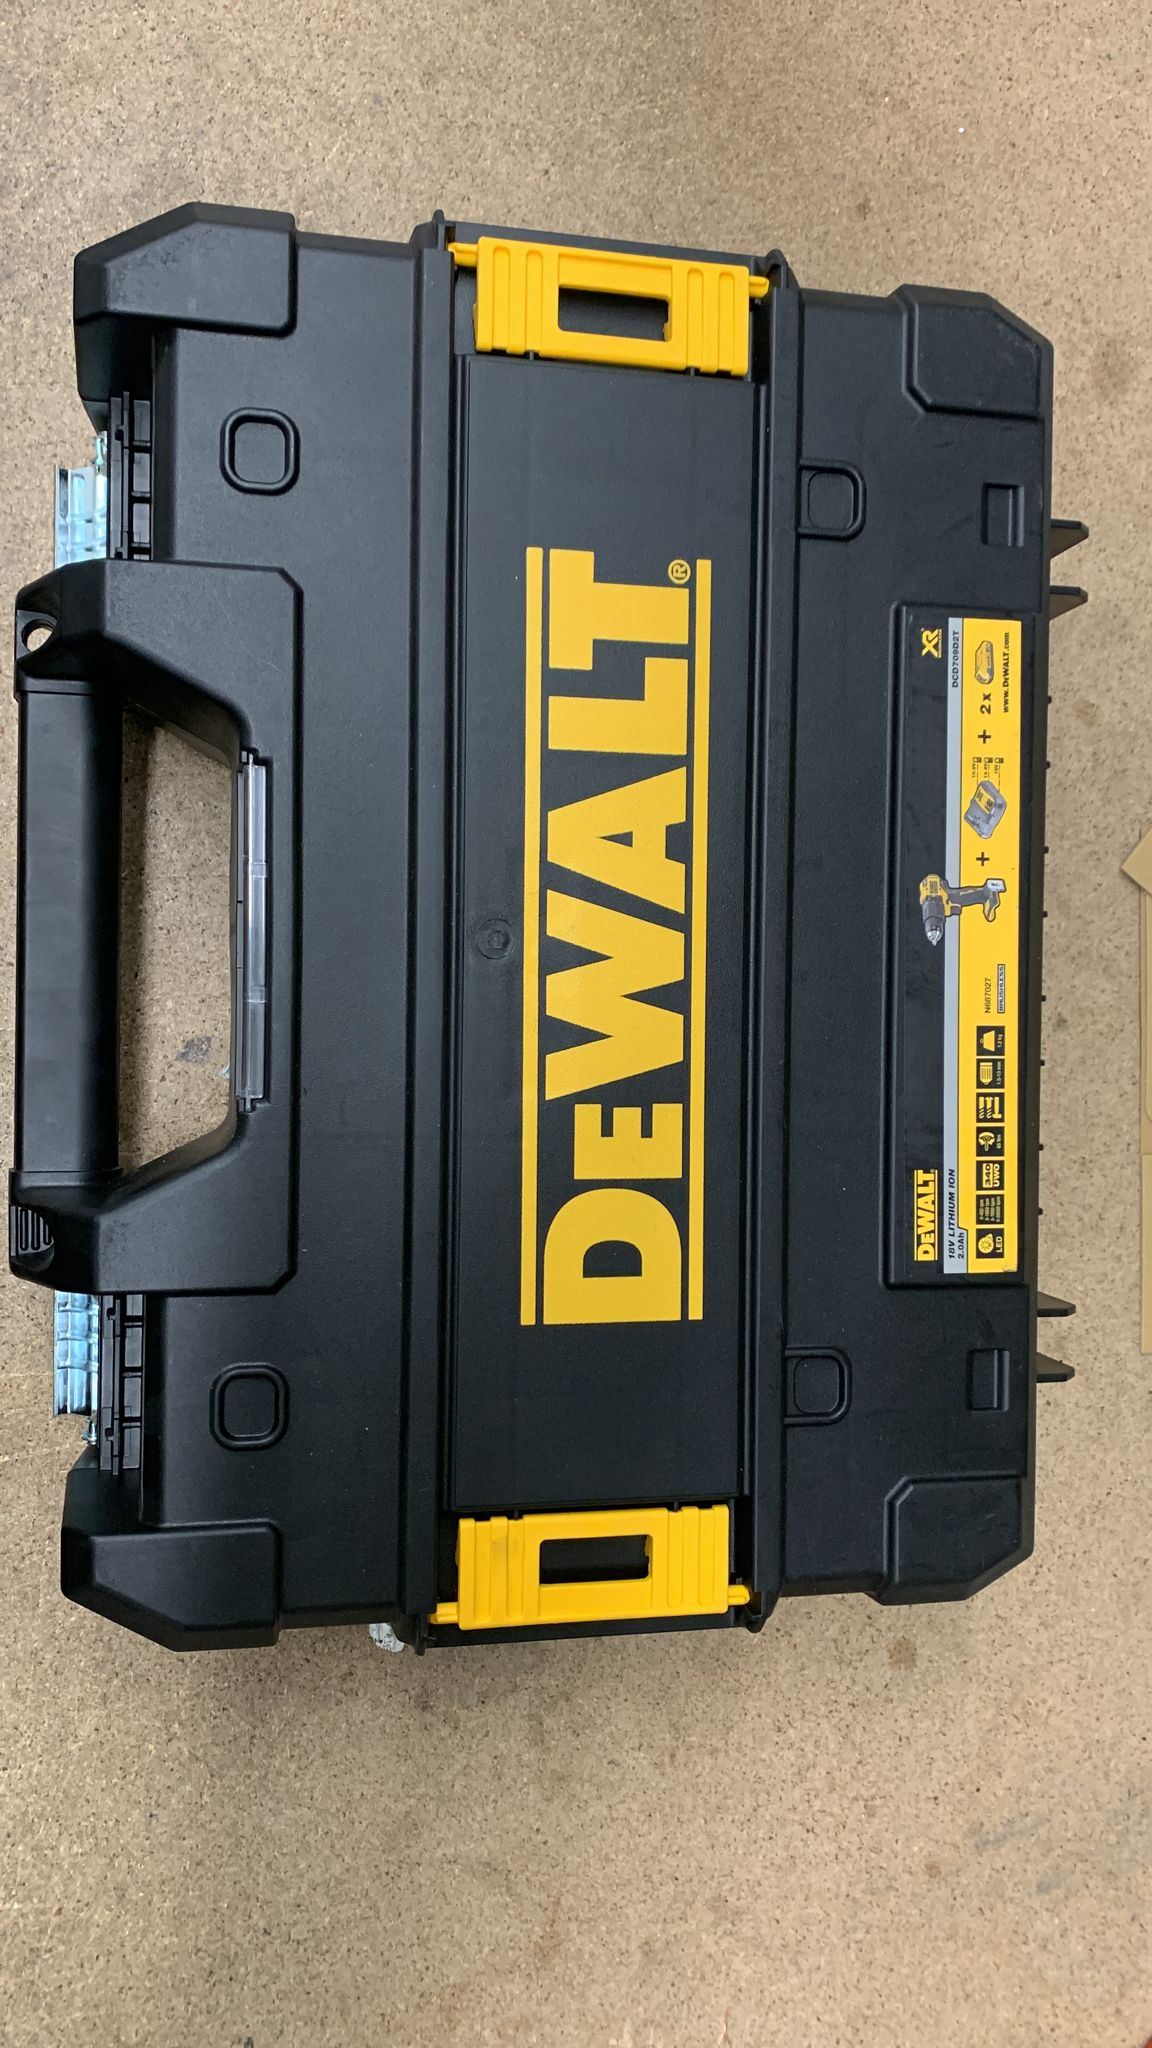 Dewalt XR Empty Case Tstak Kitbox For Dewalt Slim Battery Combi Drill Or Impact Driver Kits